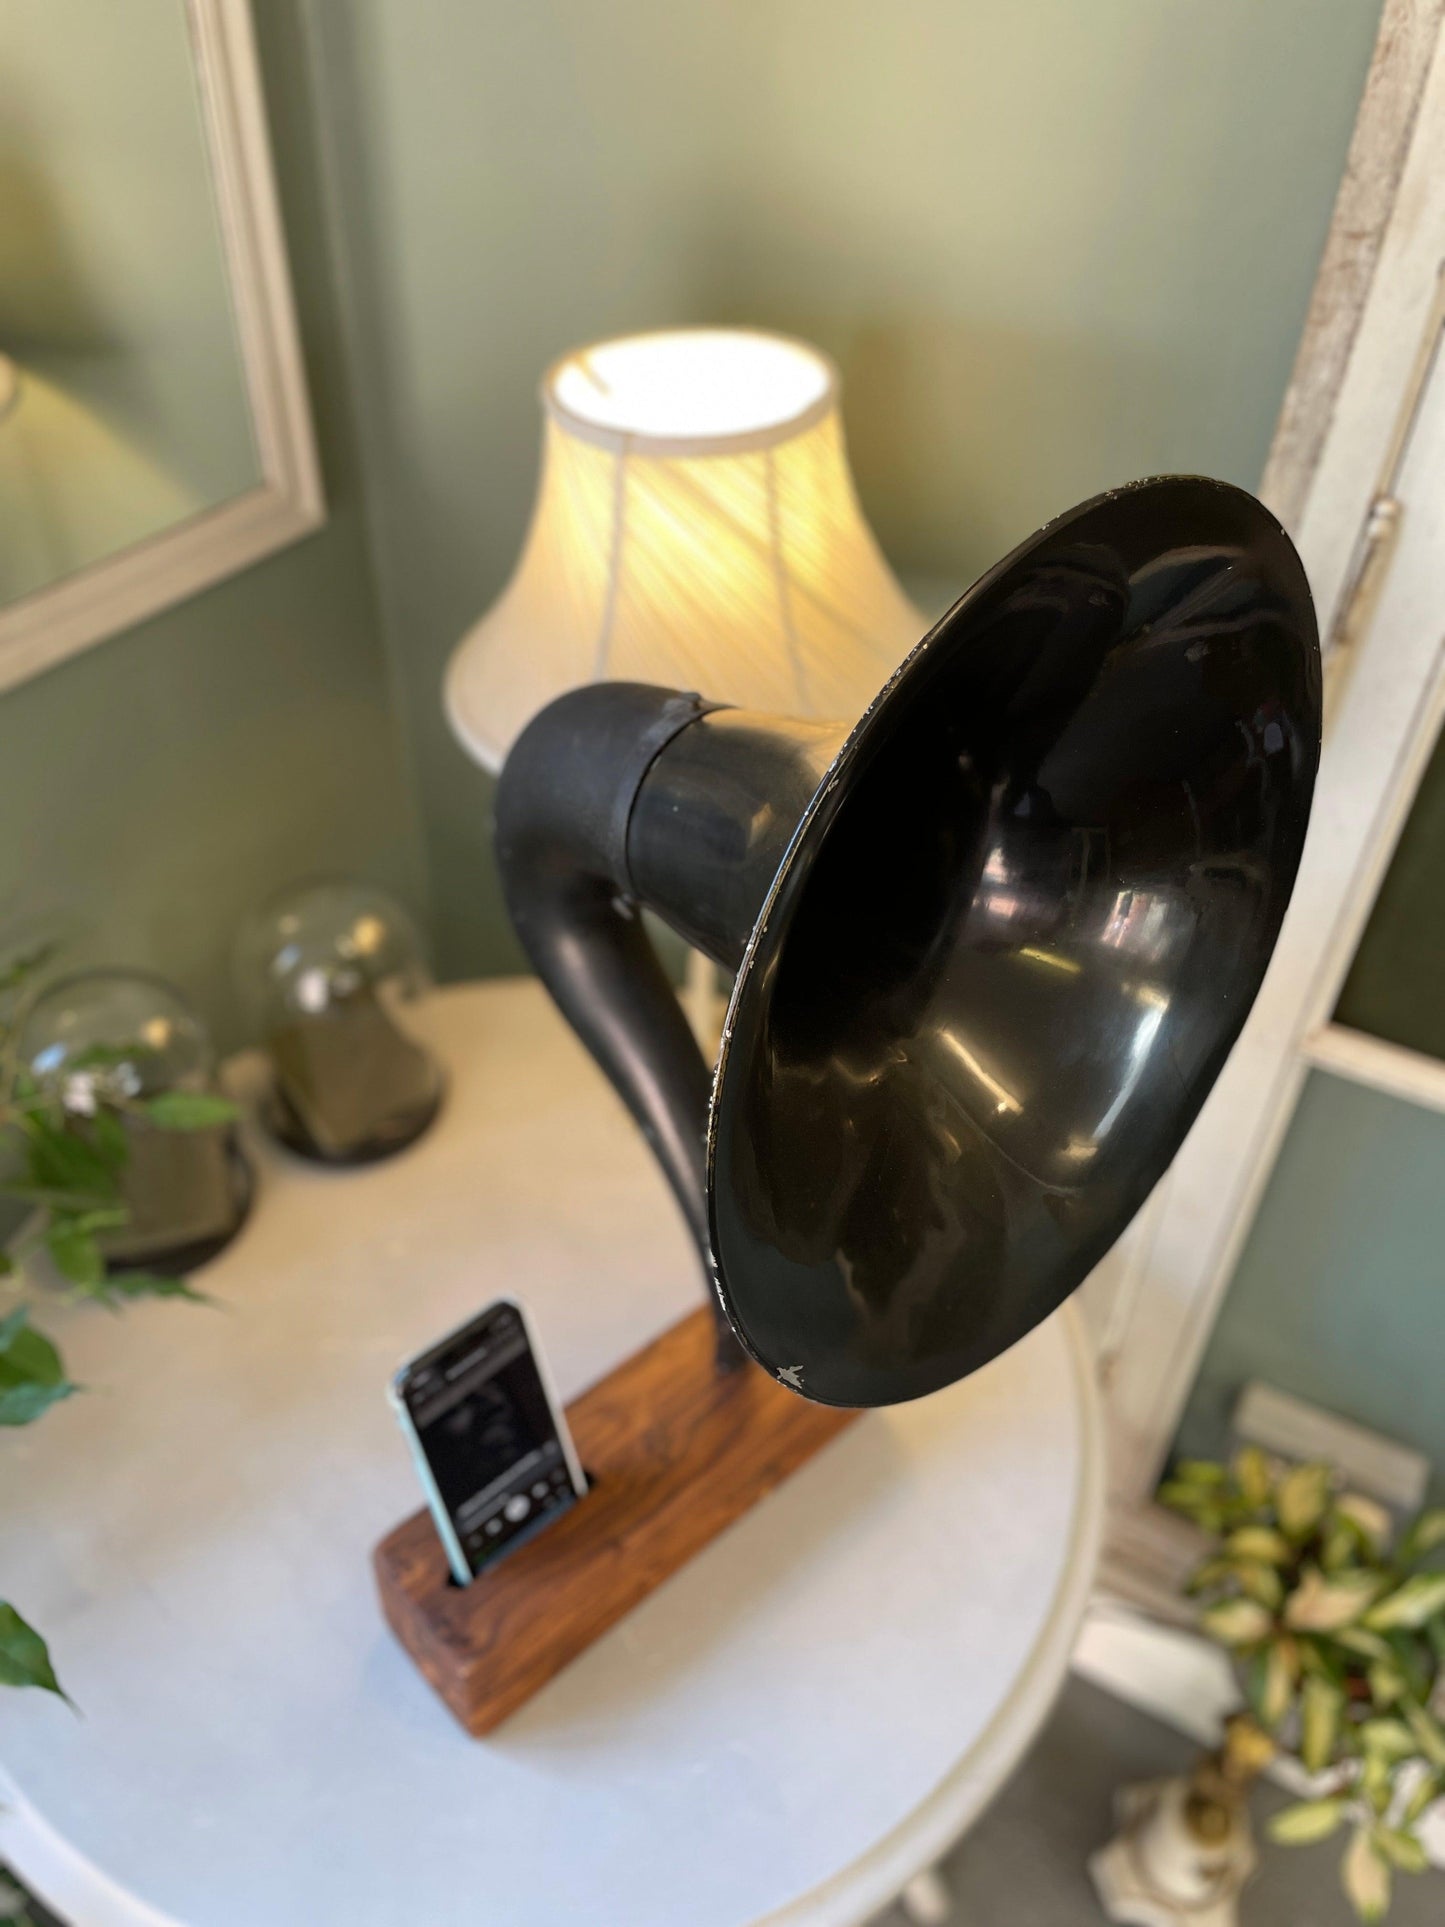 Phonograph Speaker Horn Acoustic Amplifier for Smart Phones - MooBoo Home